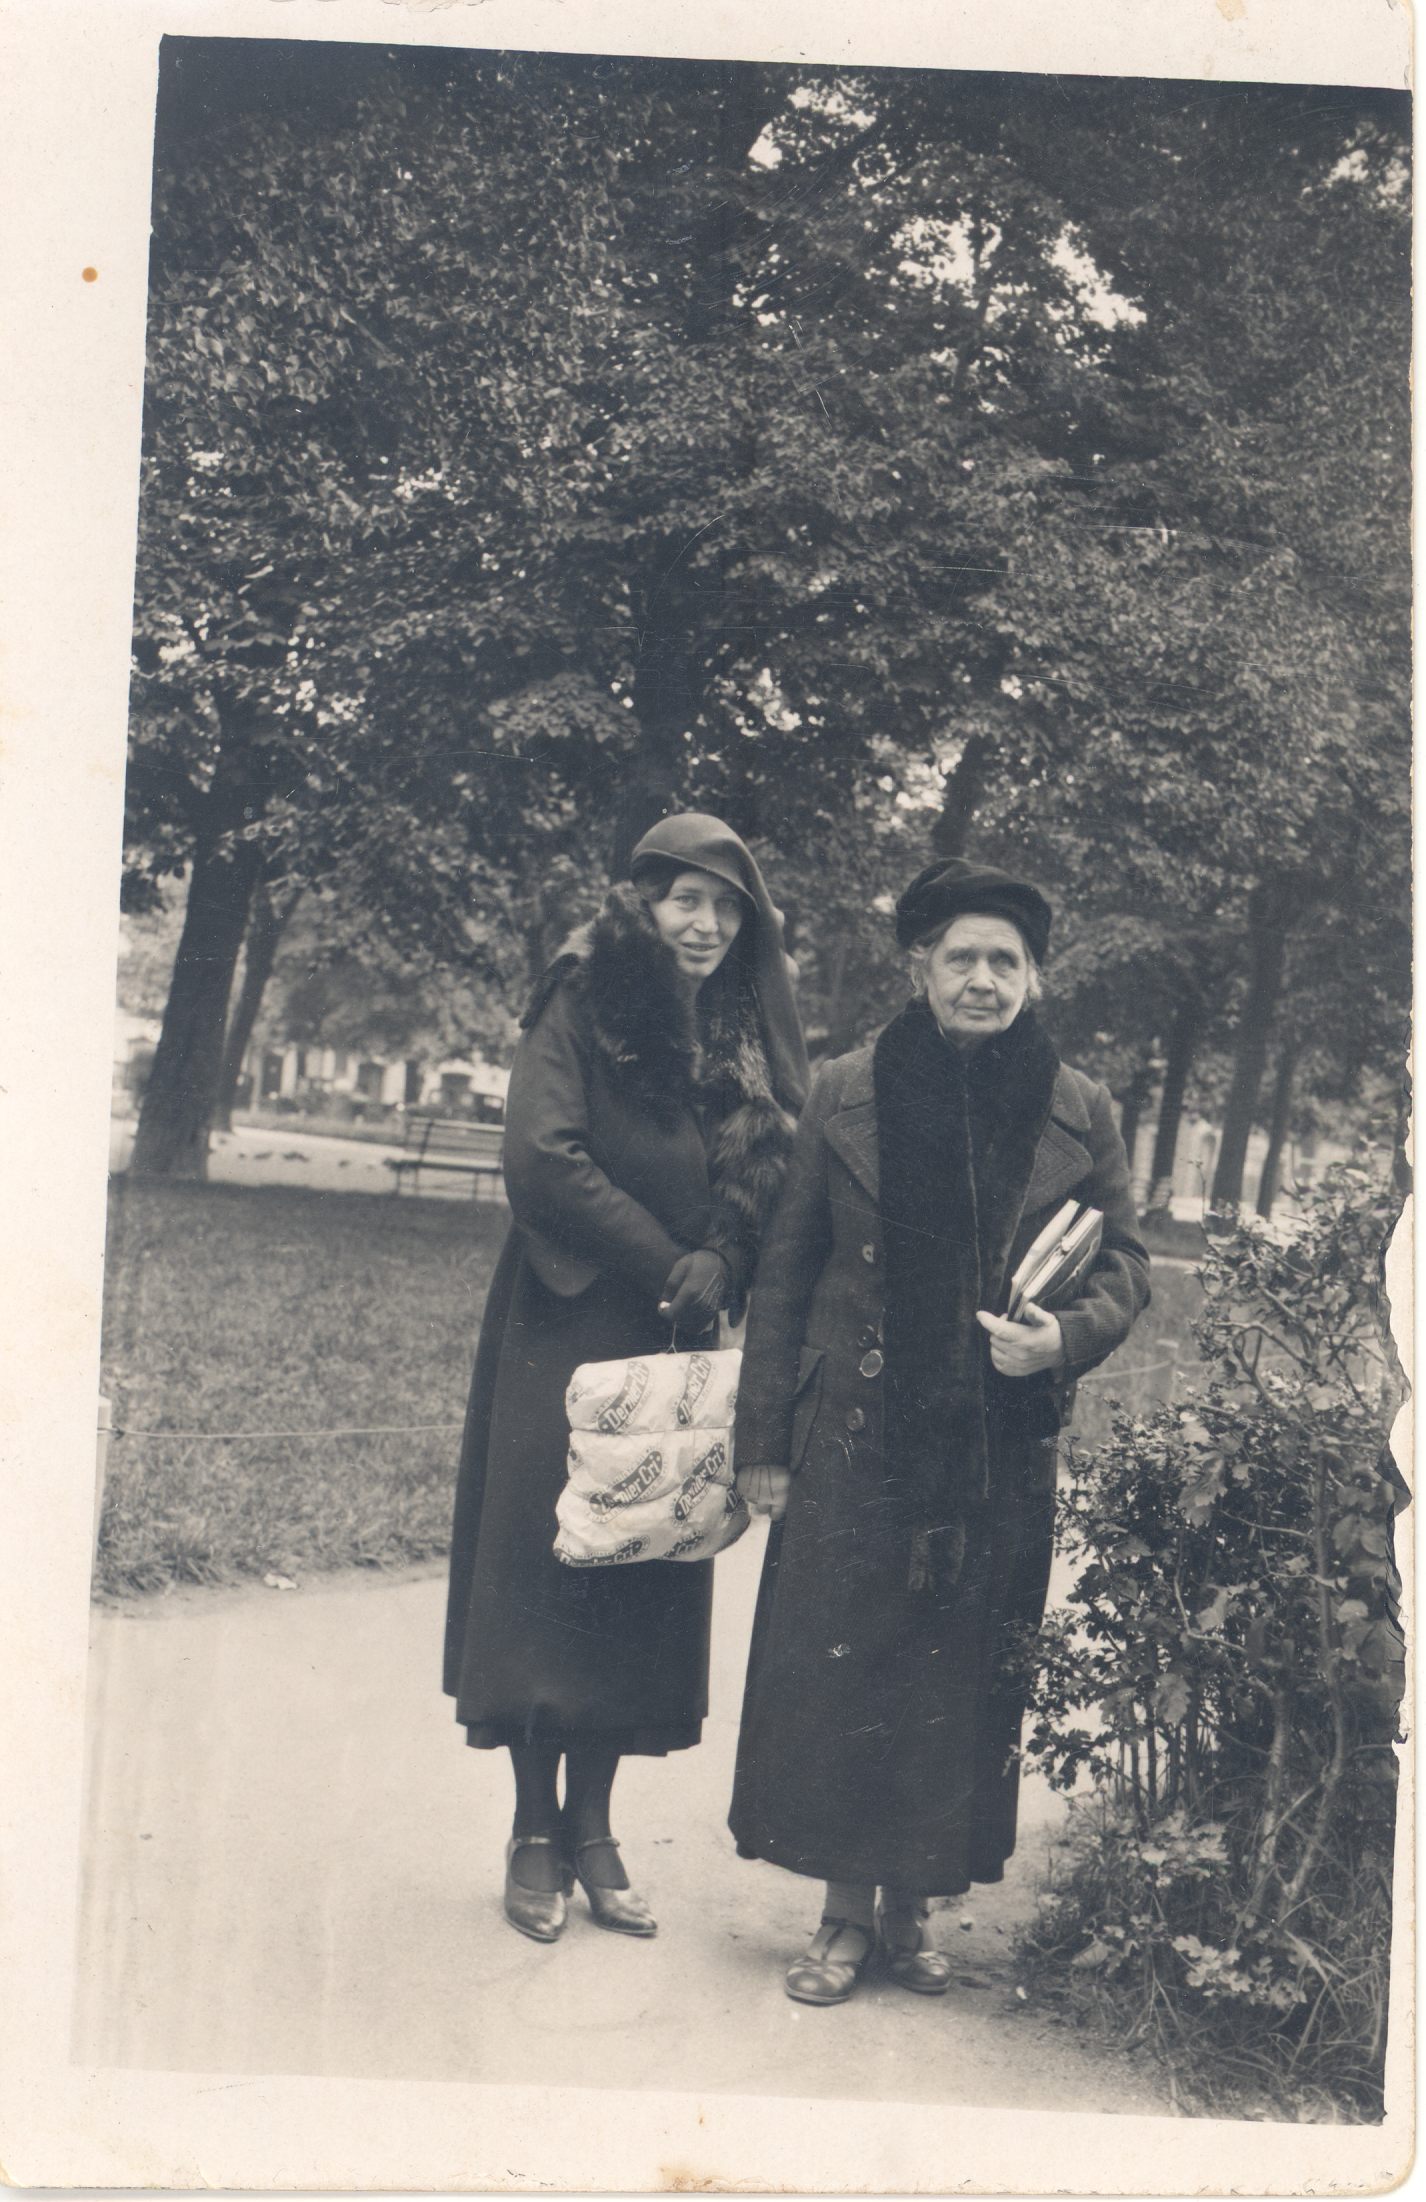 Wound, Anna and Alma Toom in Tallinn in 1935. Autumn